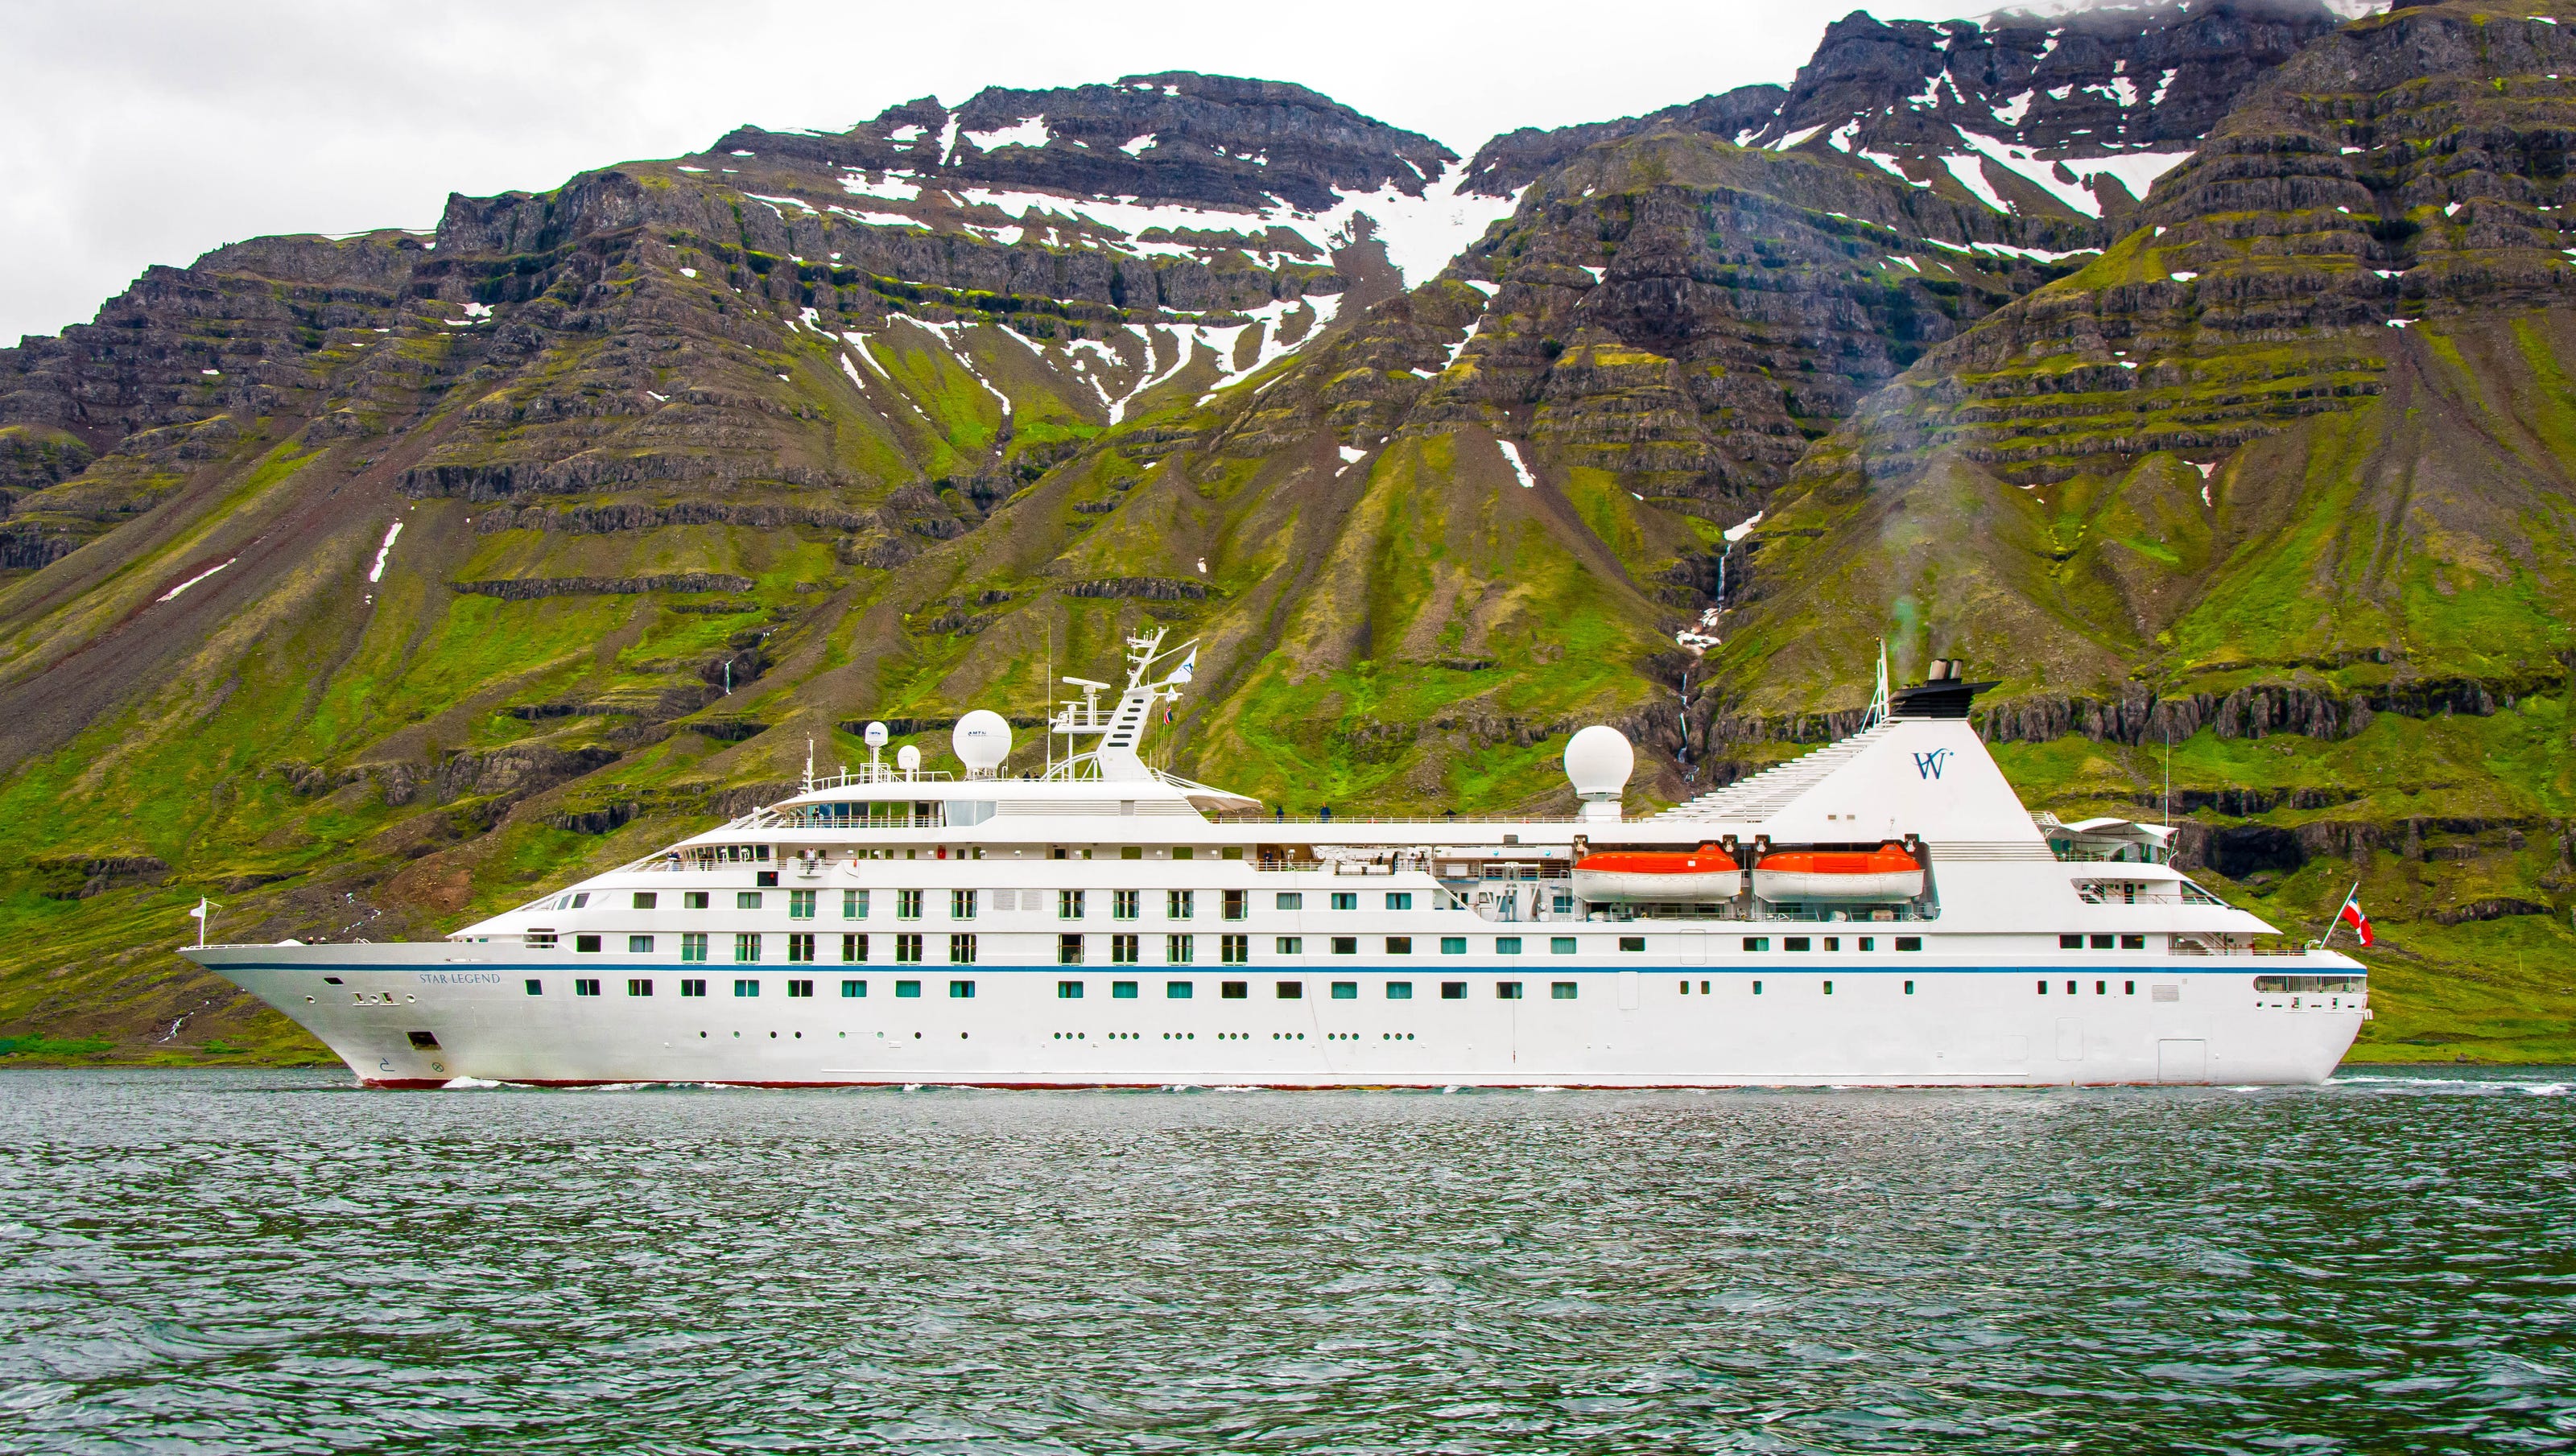 are iceland cruises rough seas